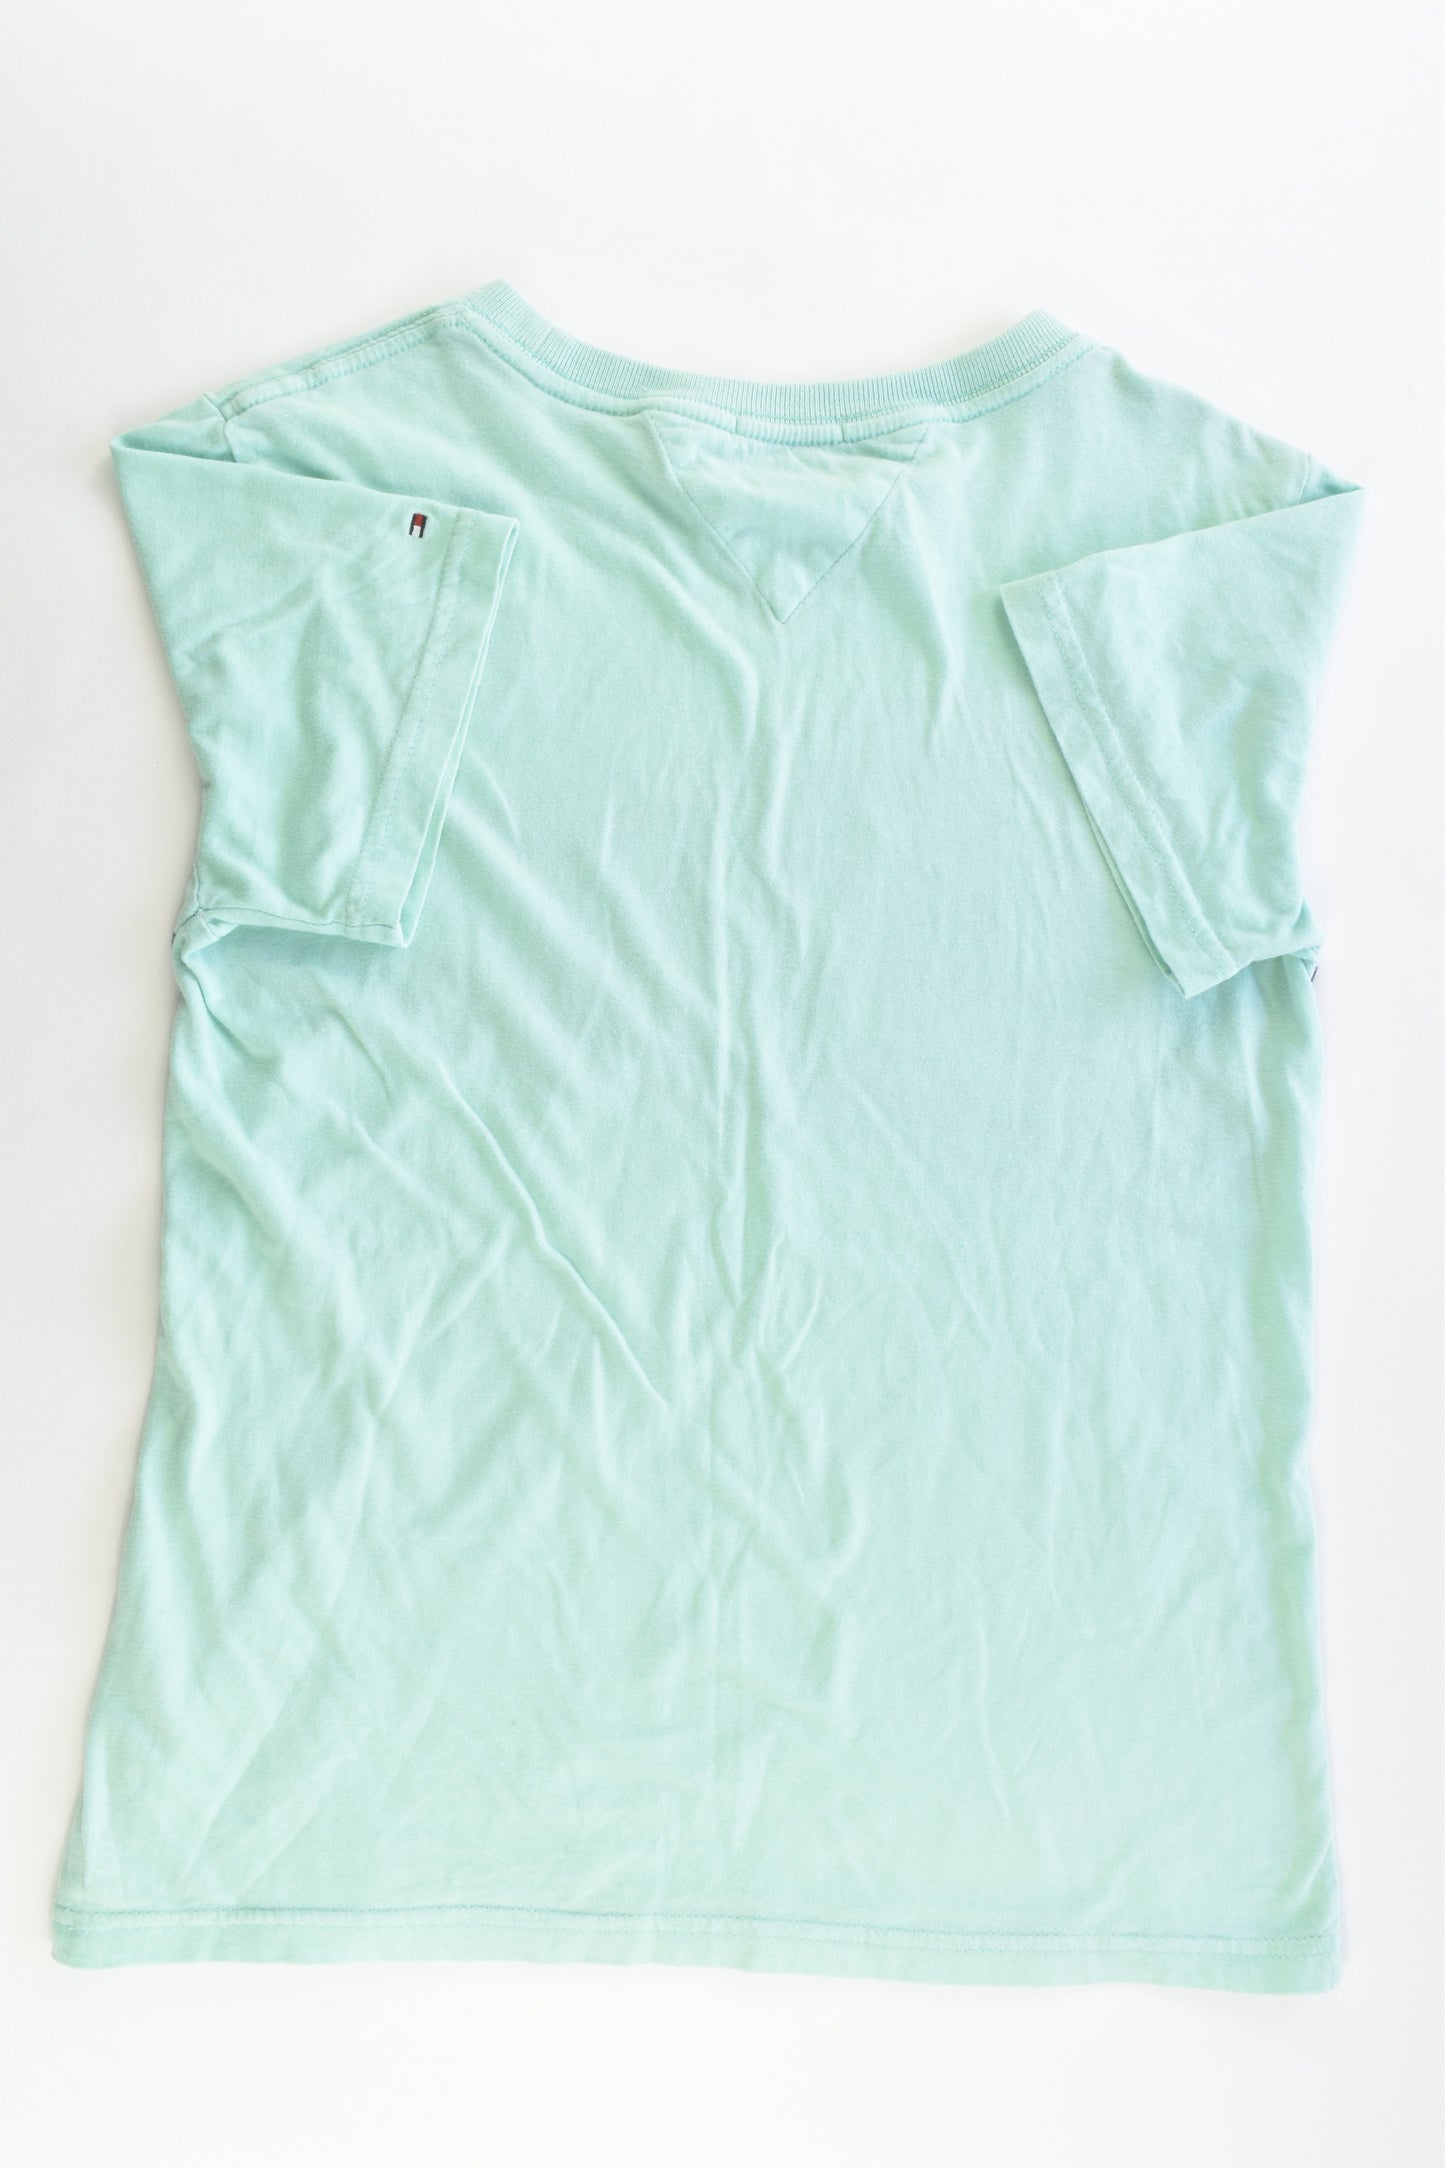 Tommy Hilfiger Size 12 (152 cm) T-shirt